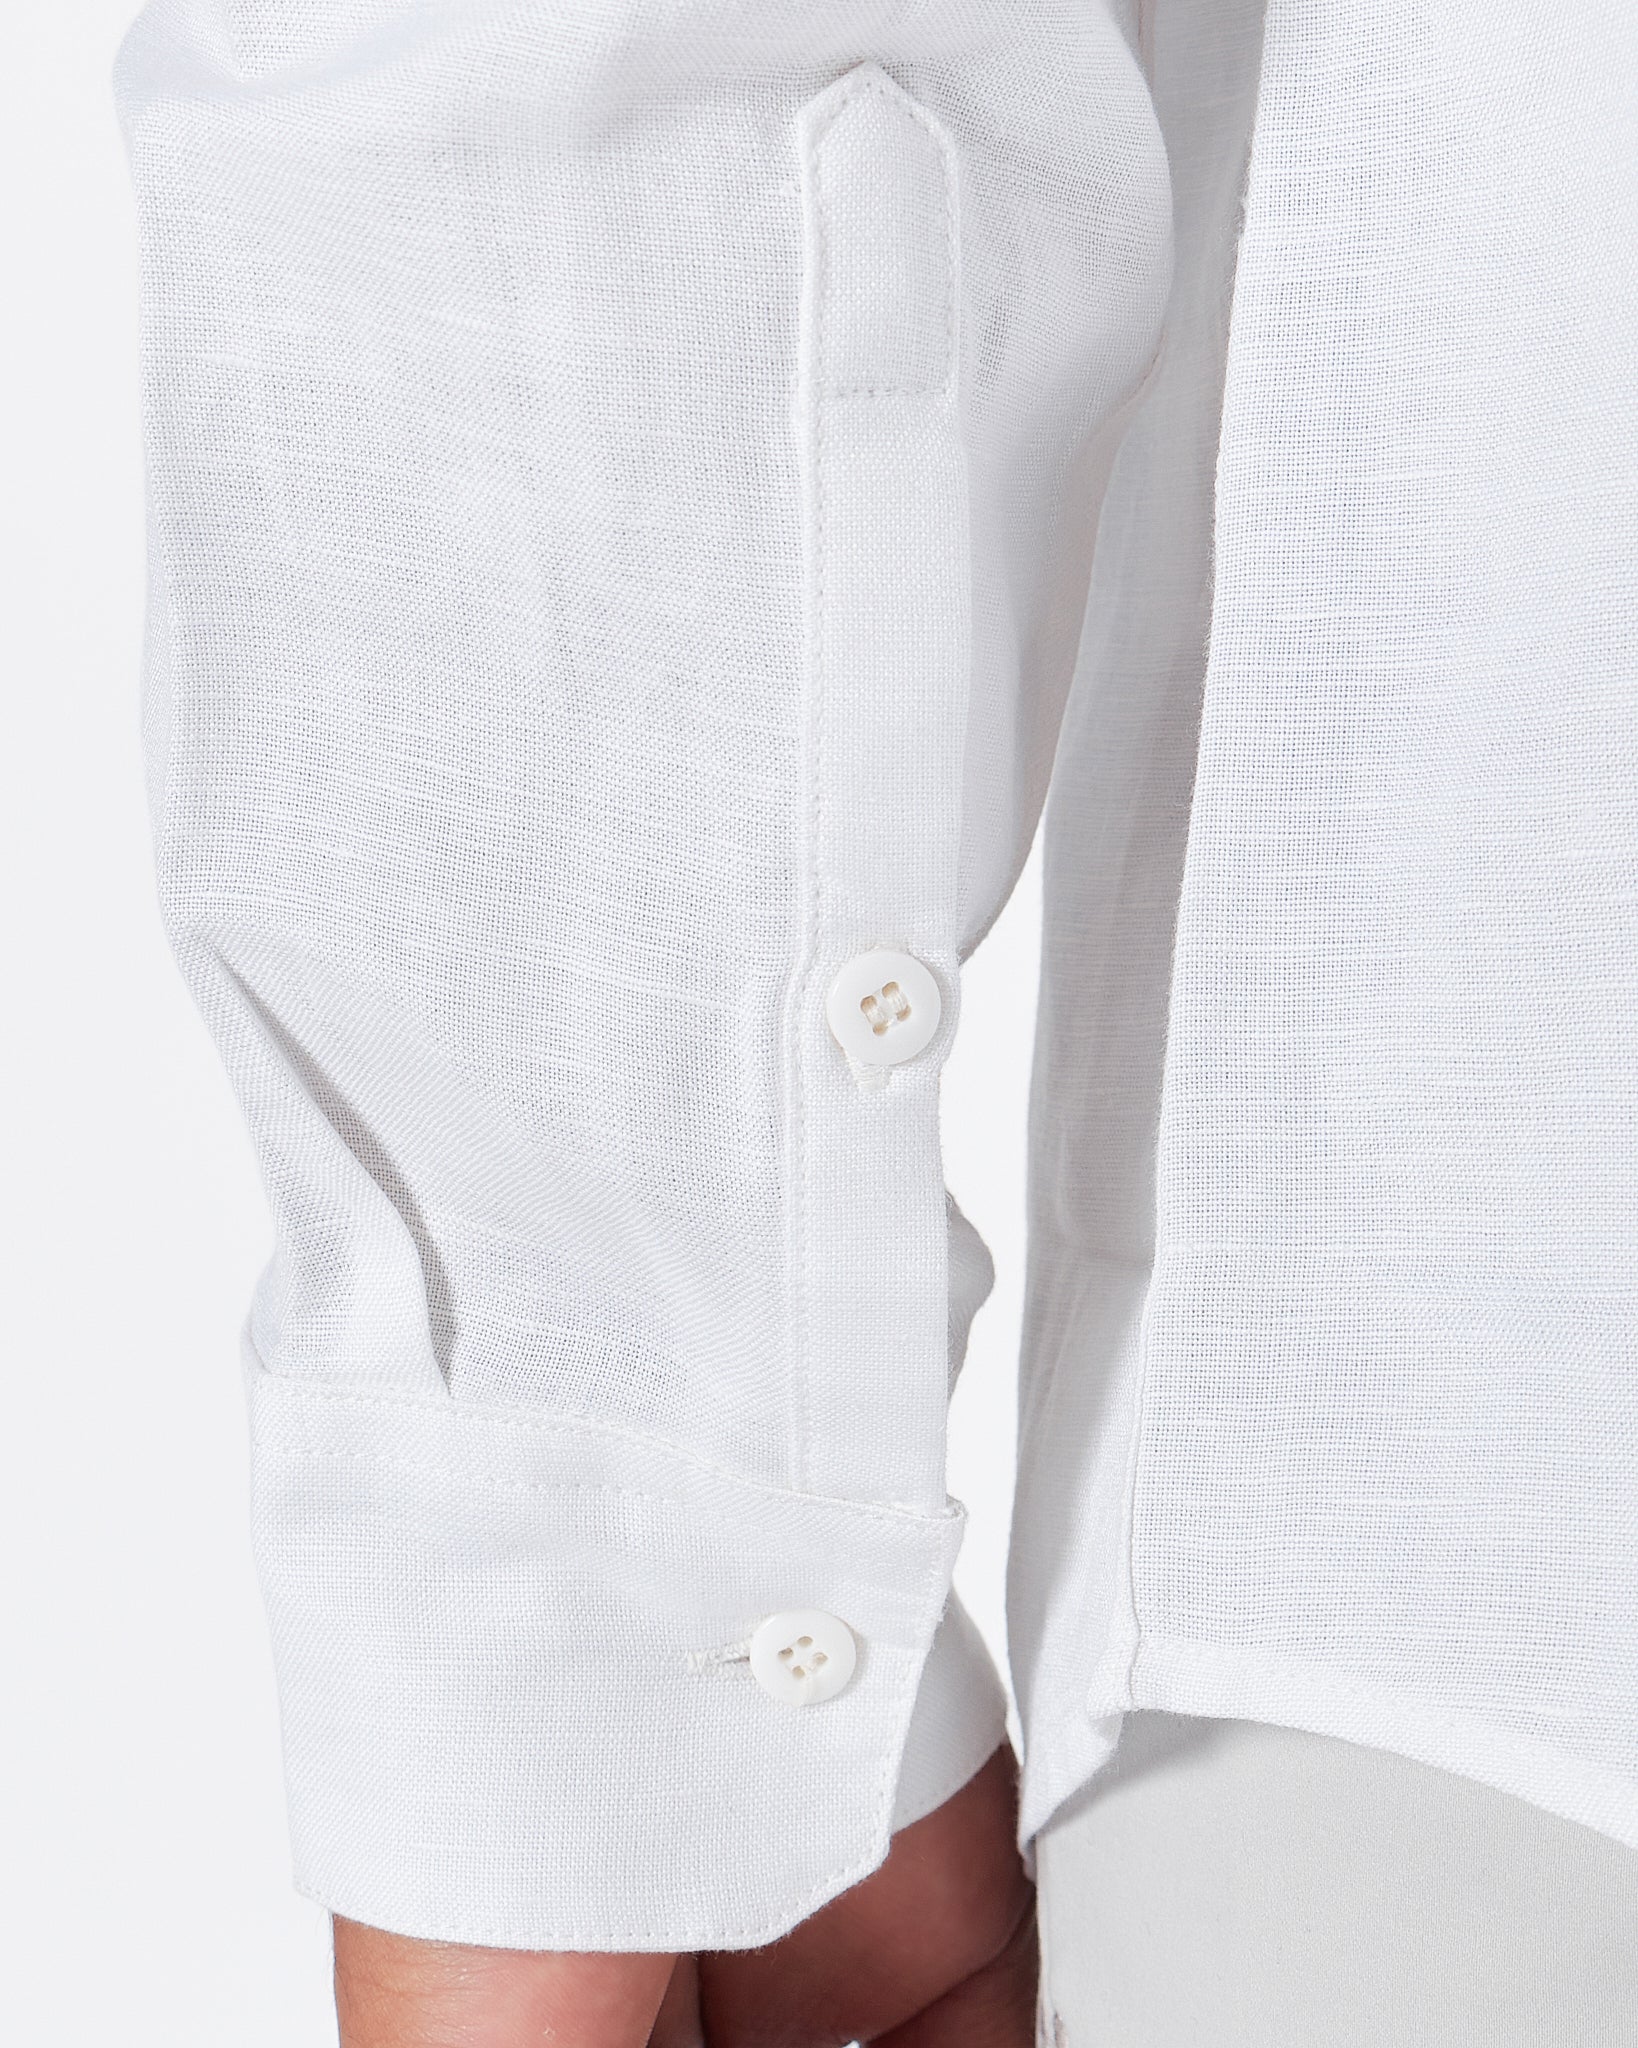 RL 棉质男士白衬衫长袖 30.90